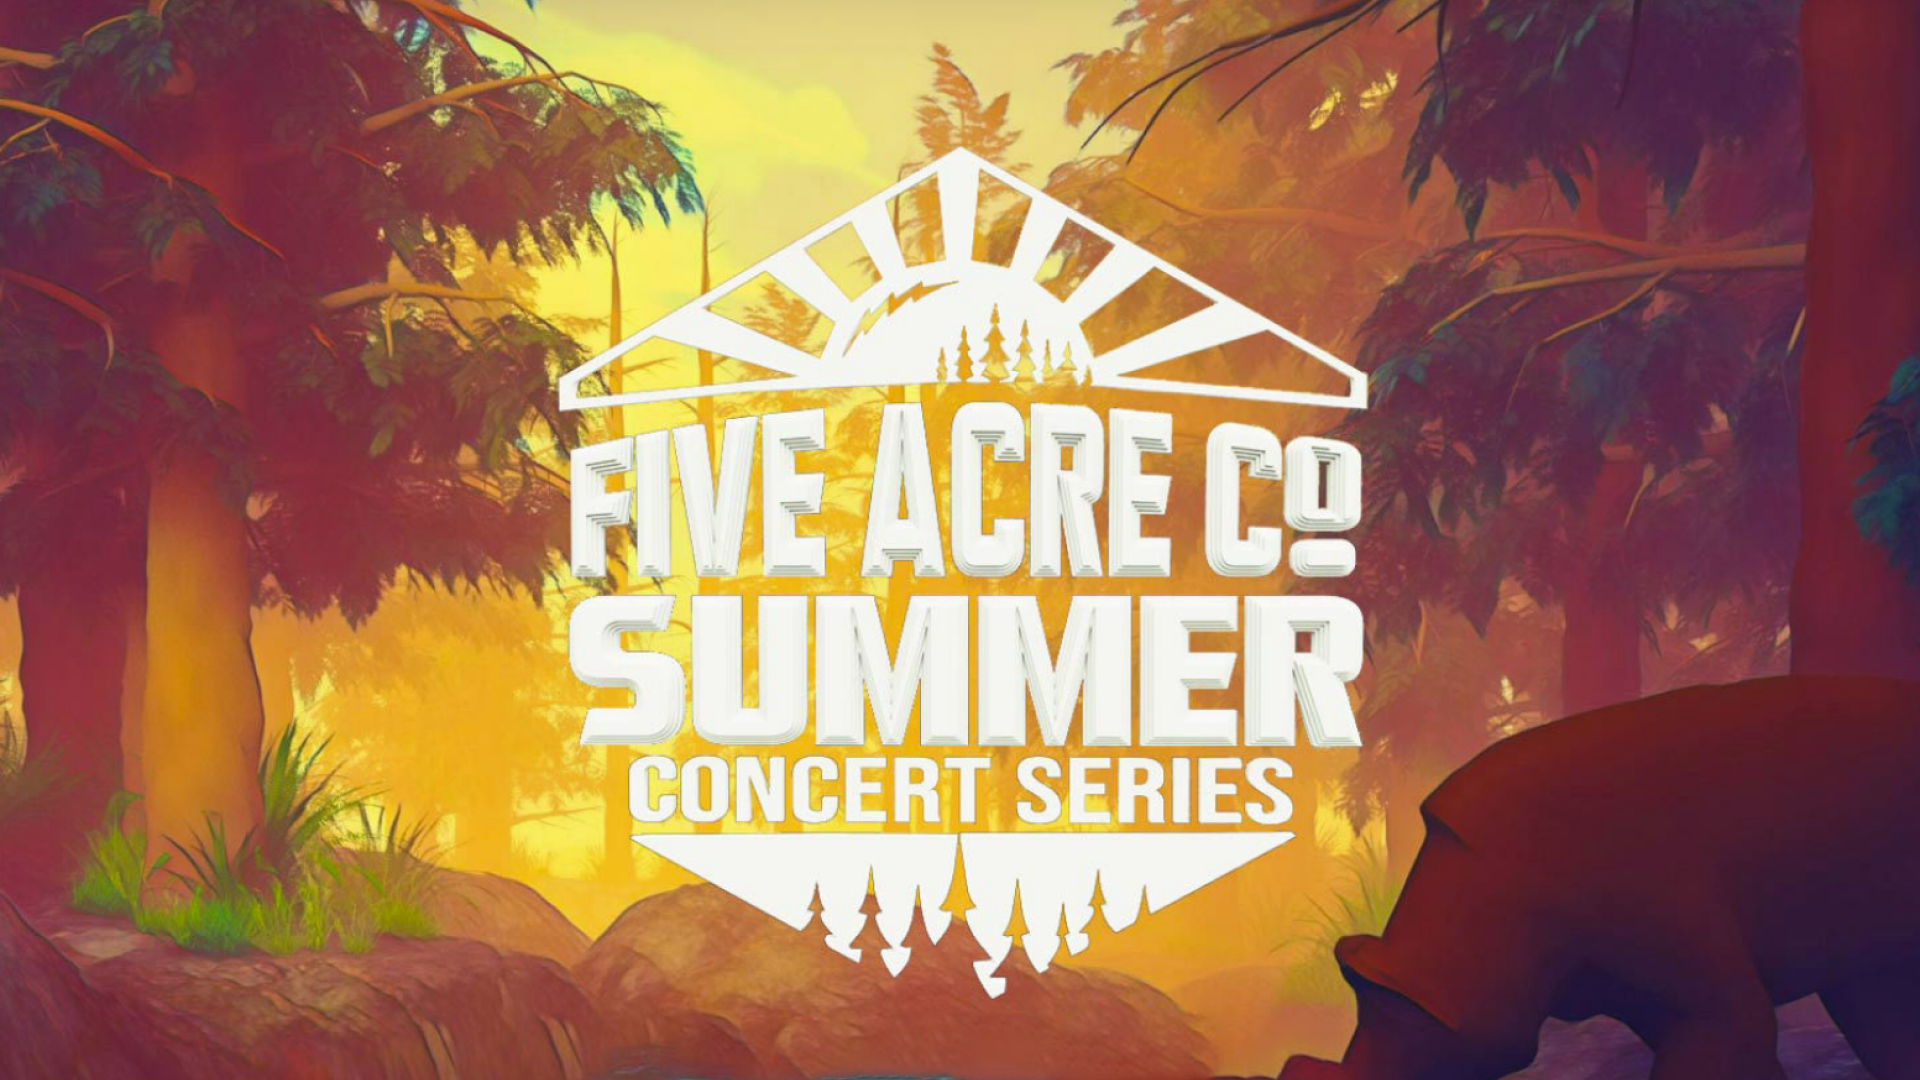 Five Acre Co. "Summer Concert Series" 2022 Logo